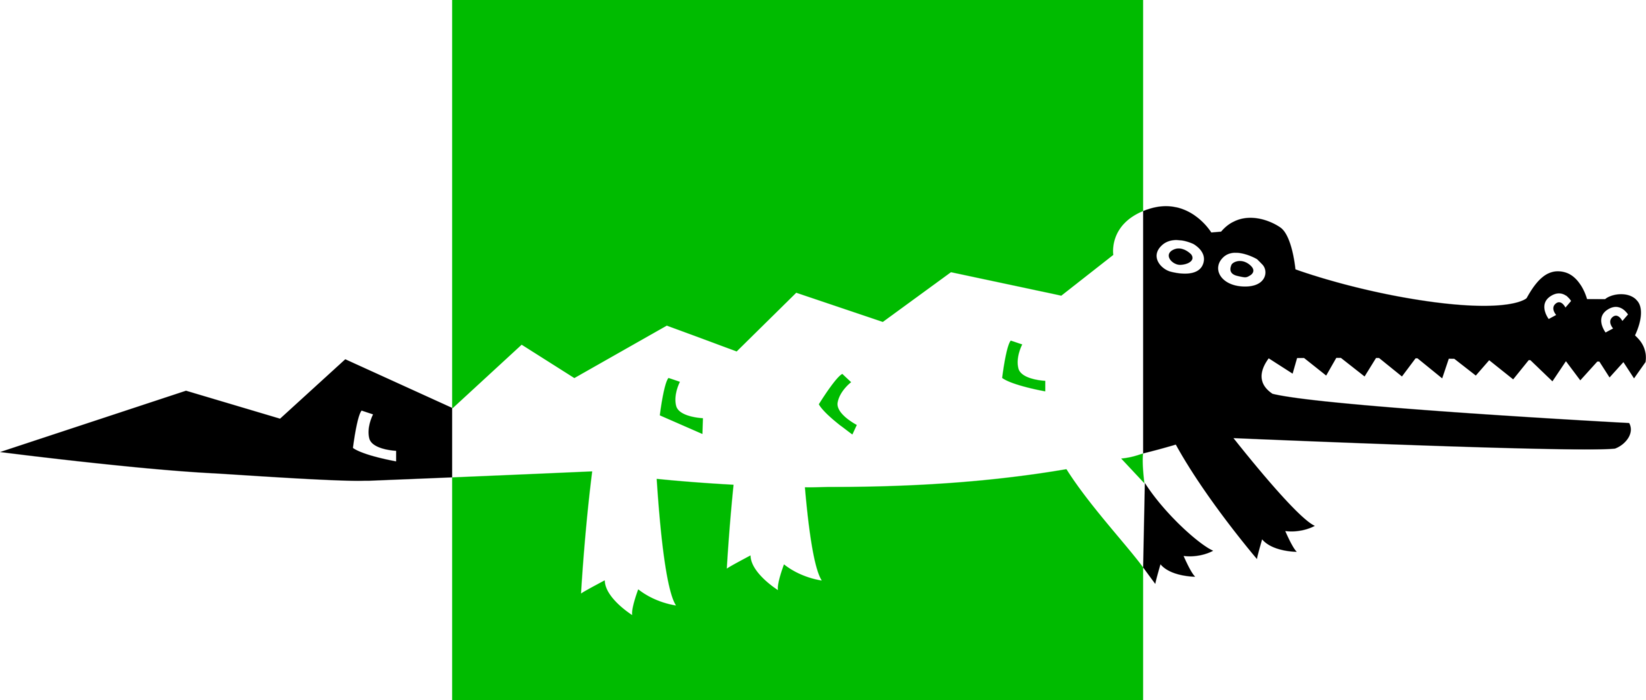 Vector Illustration of Alligator or Crocodile Tropical Aquatic Reptile